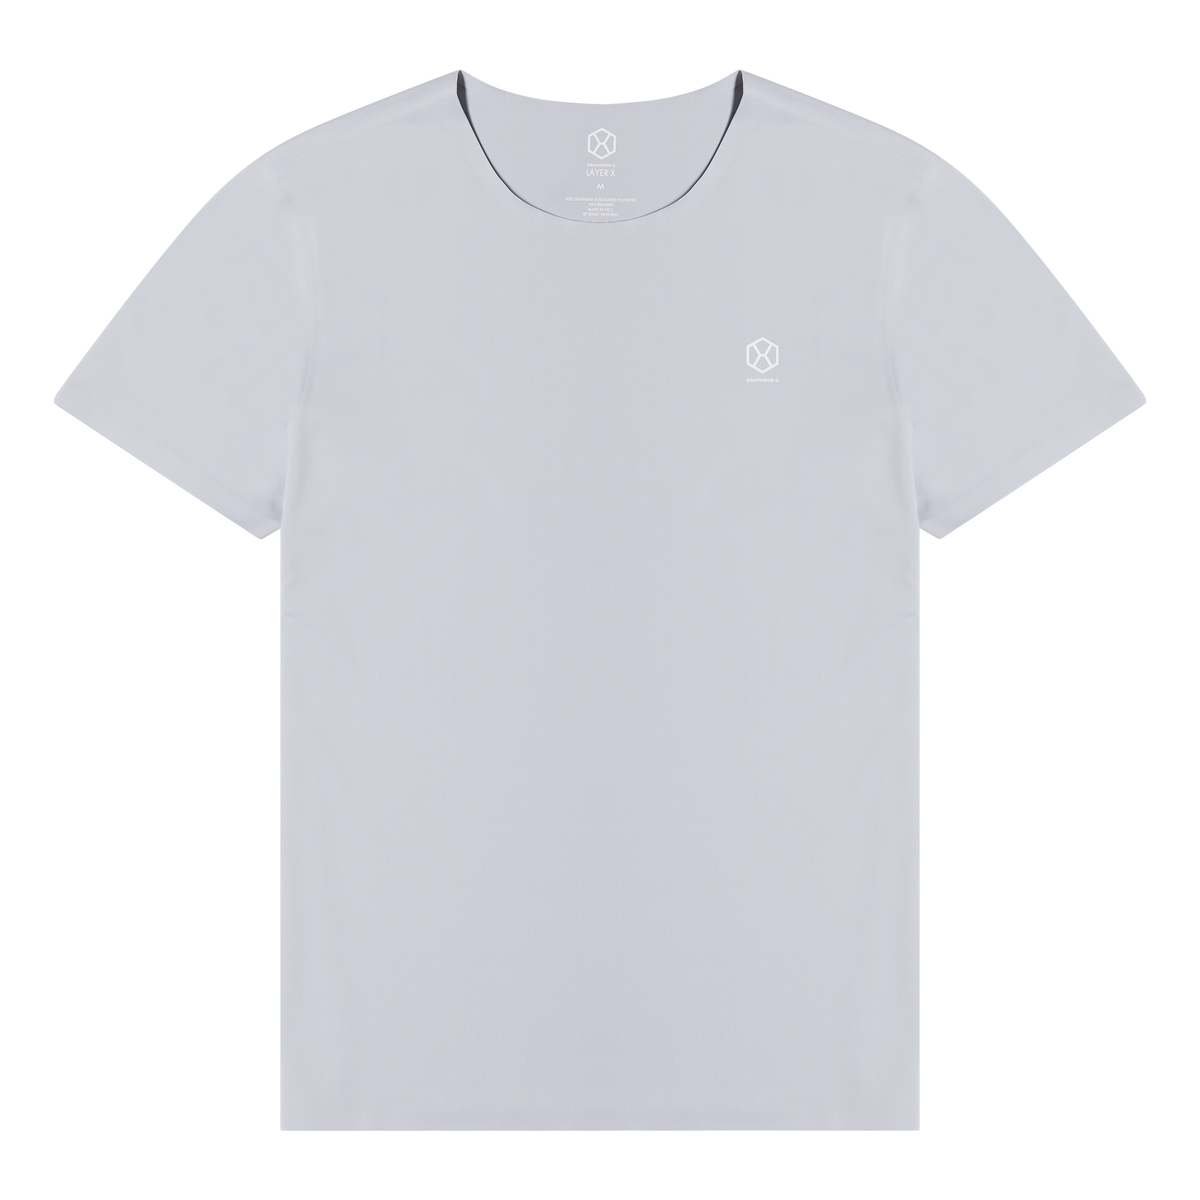 Short Sleeve Shirt Gray